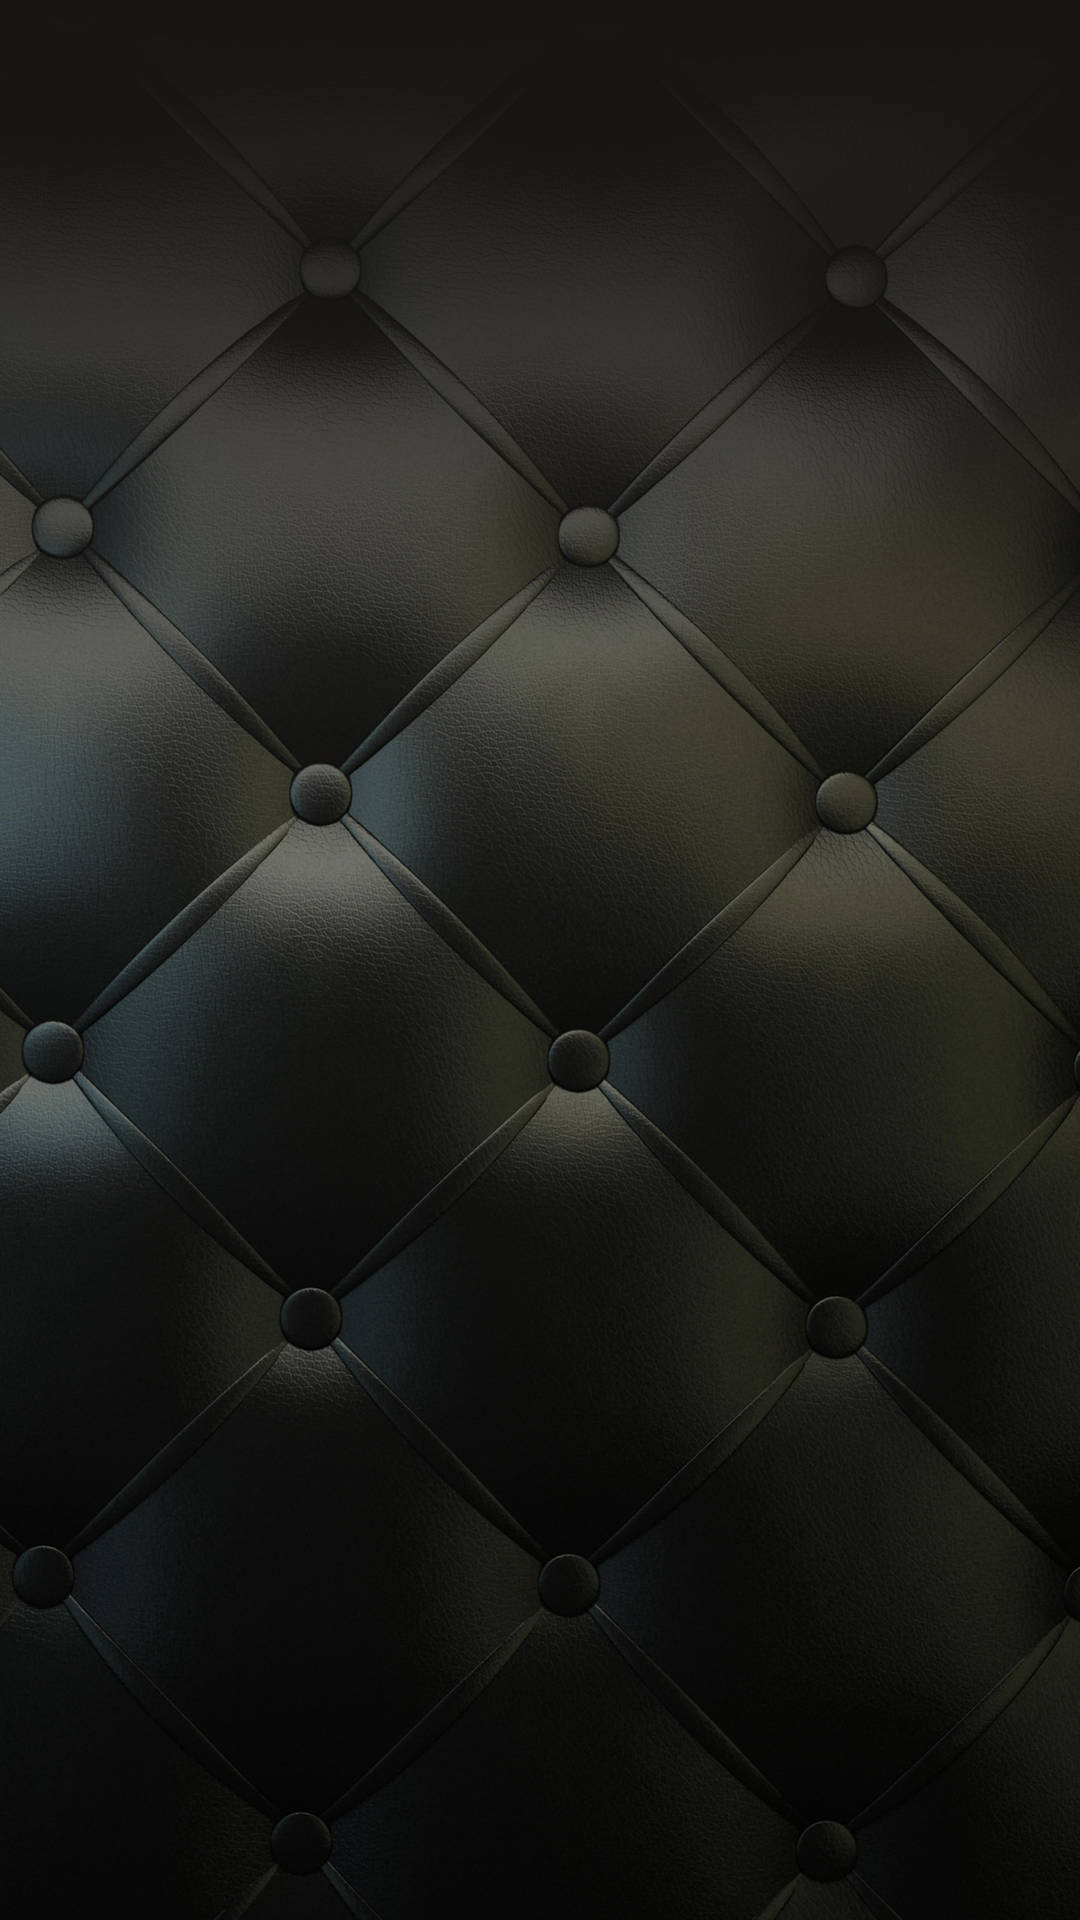 Elegant Black Iphone Against Leather Upholstery Background